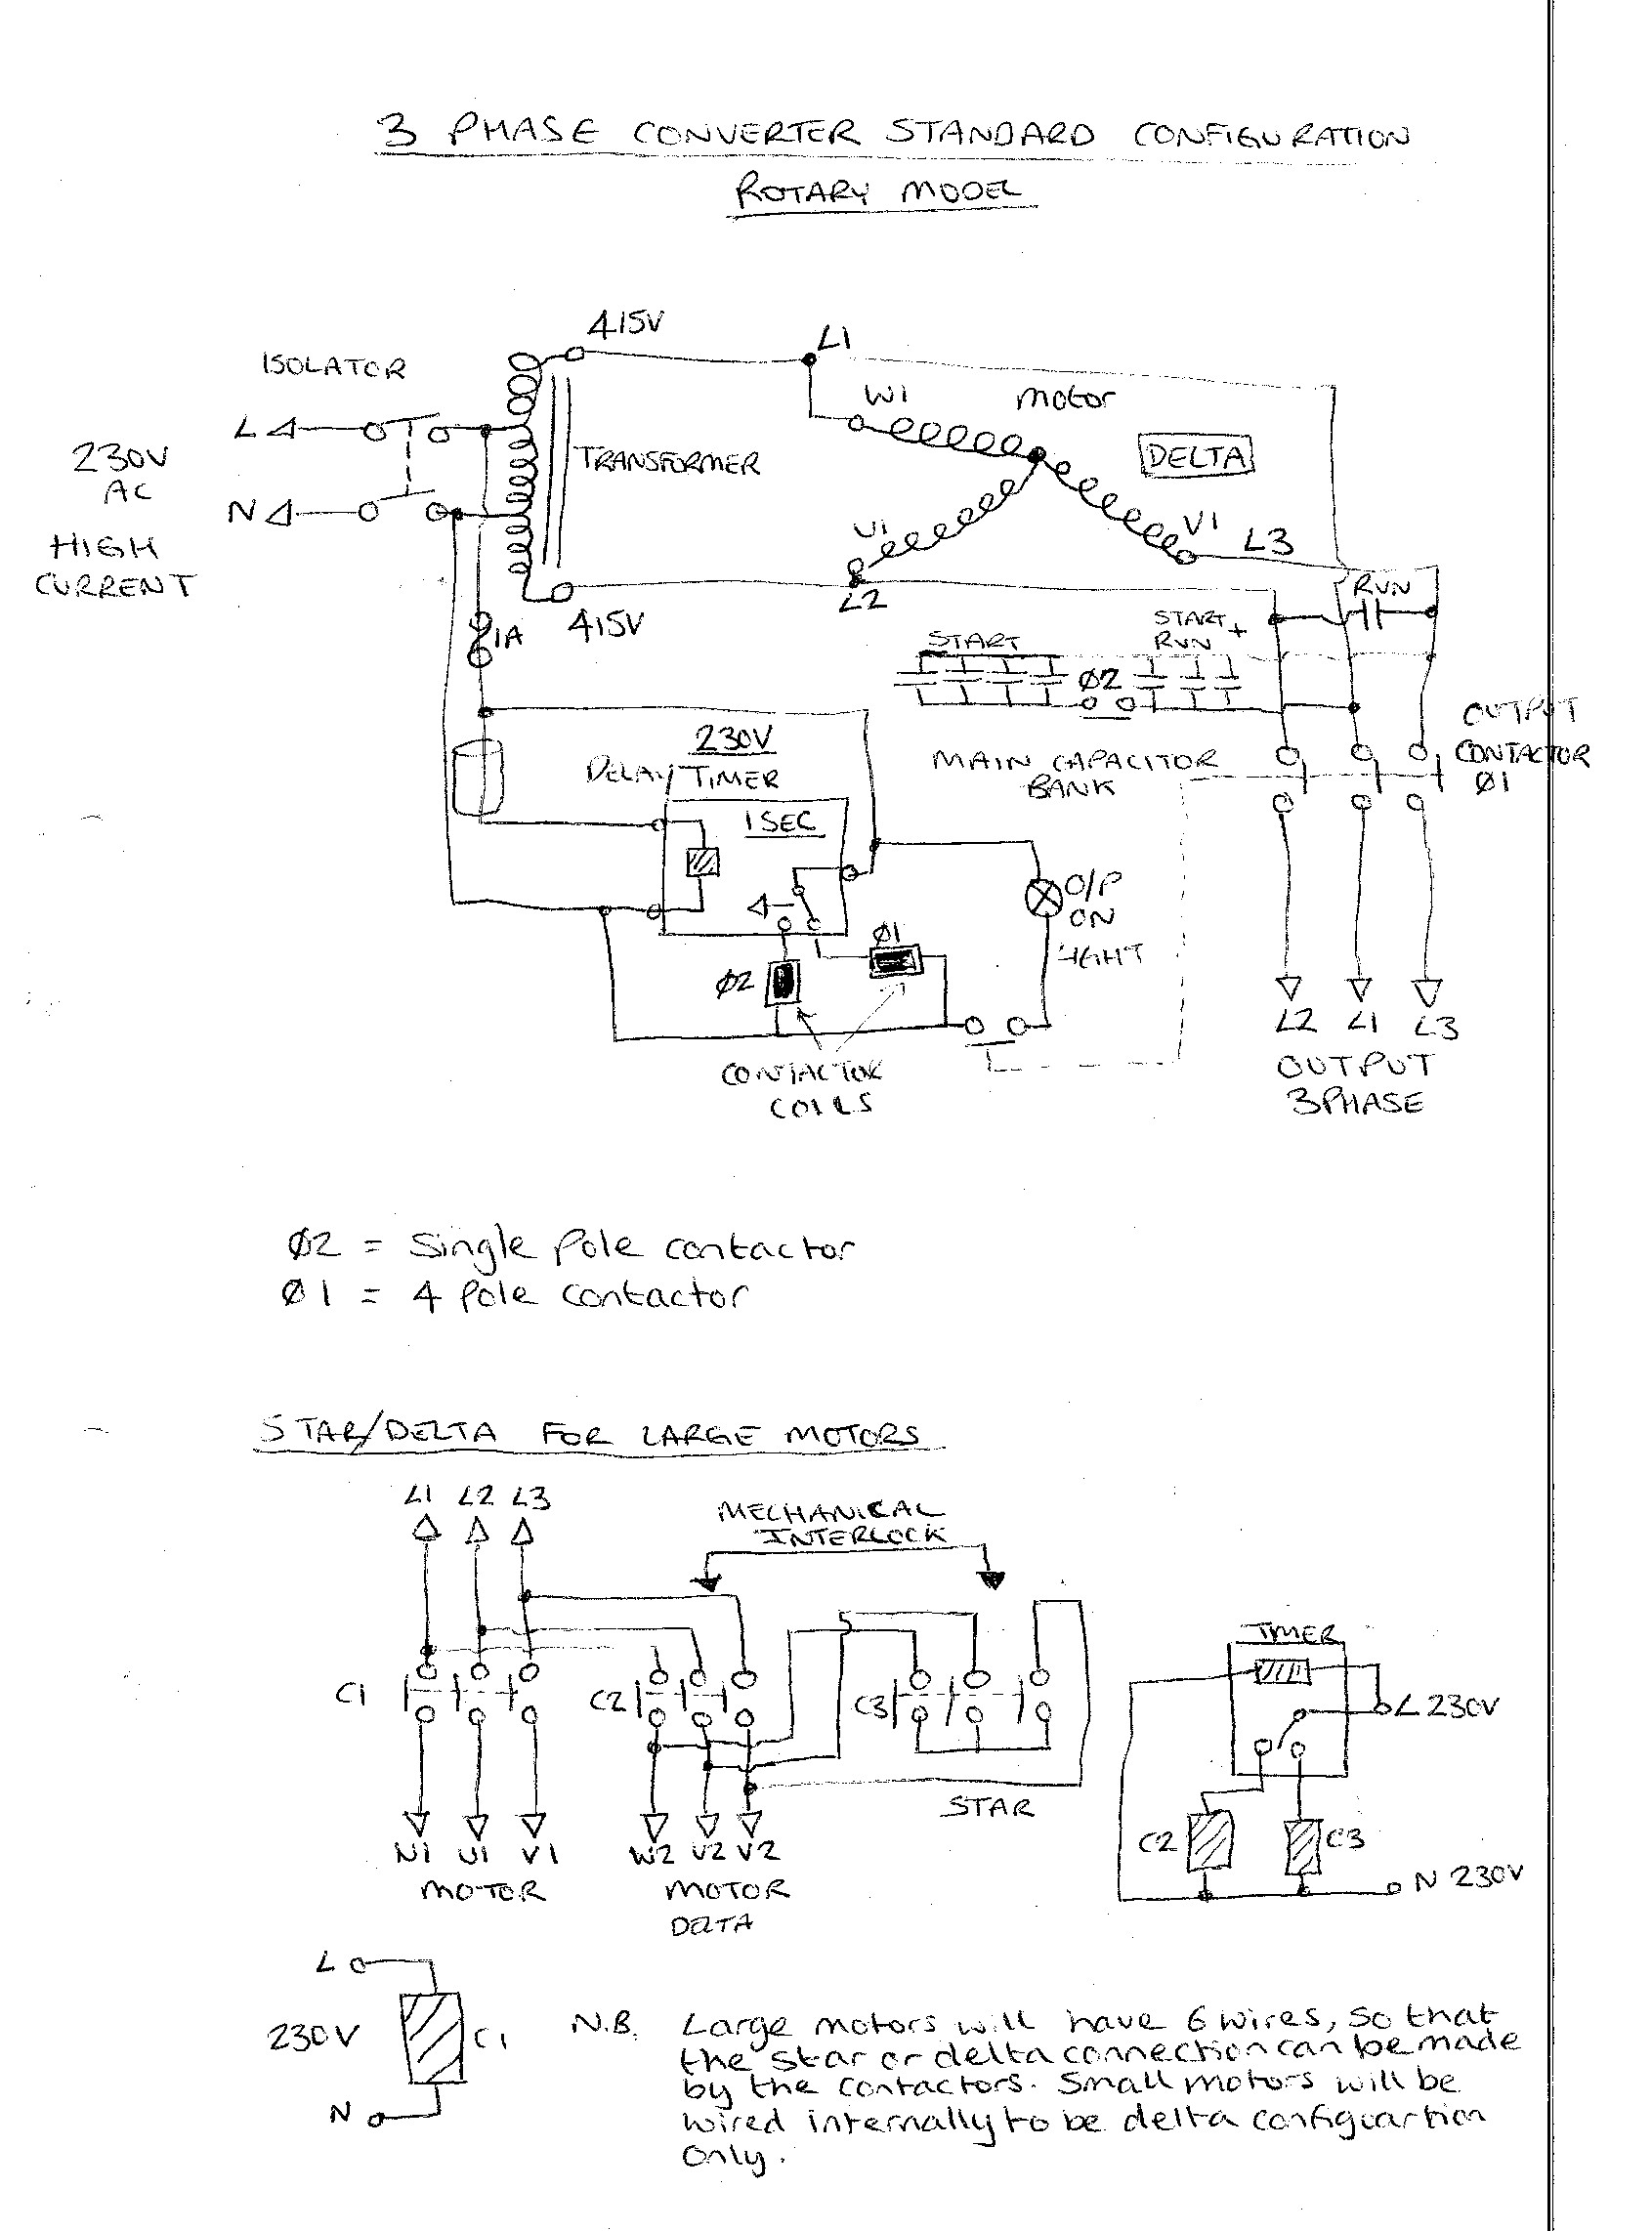 Ronk Phase Converter Wiring Diagram Ronk Phase Converter Wiring Diagram within Gansoukin Me Mesmerizing Of Ronk Phase Converter Wiring Diagram